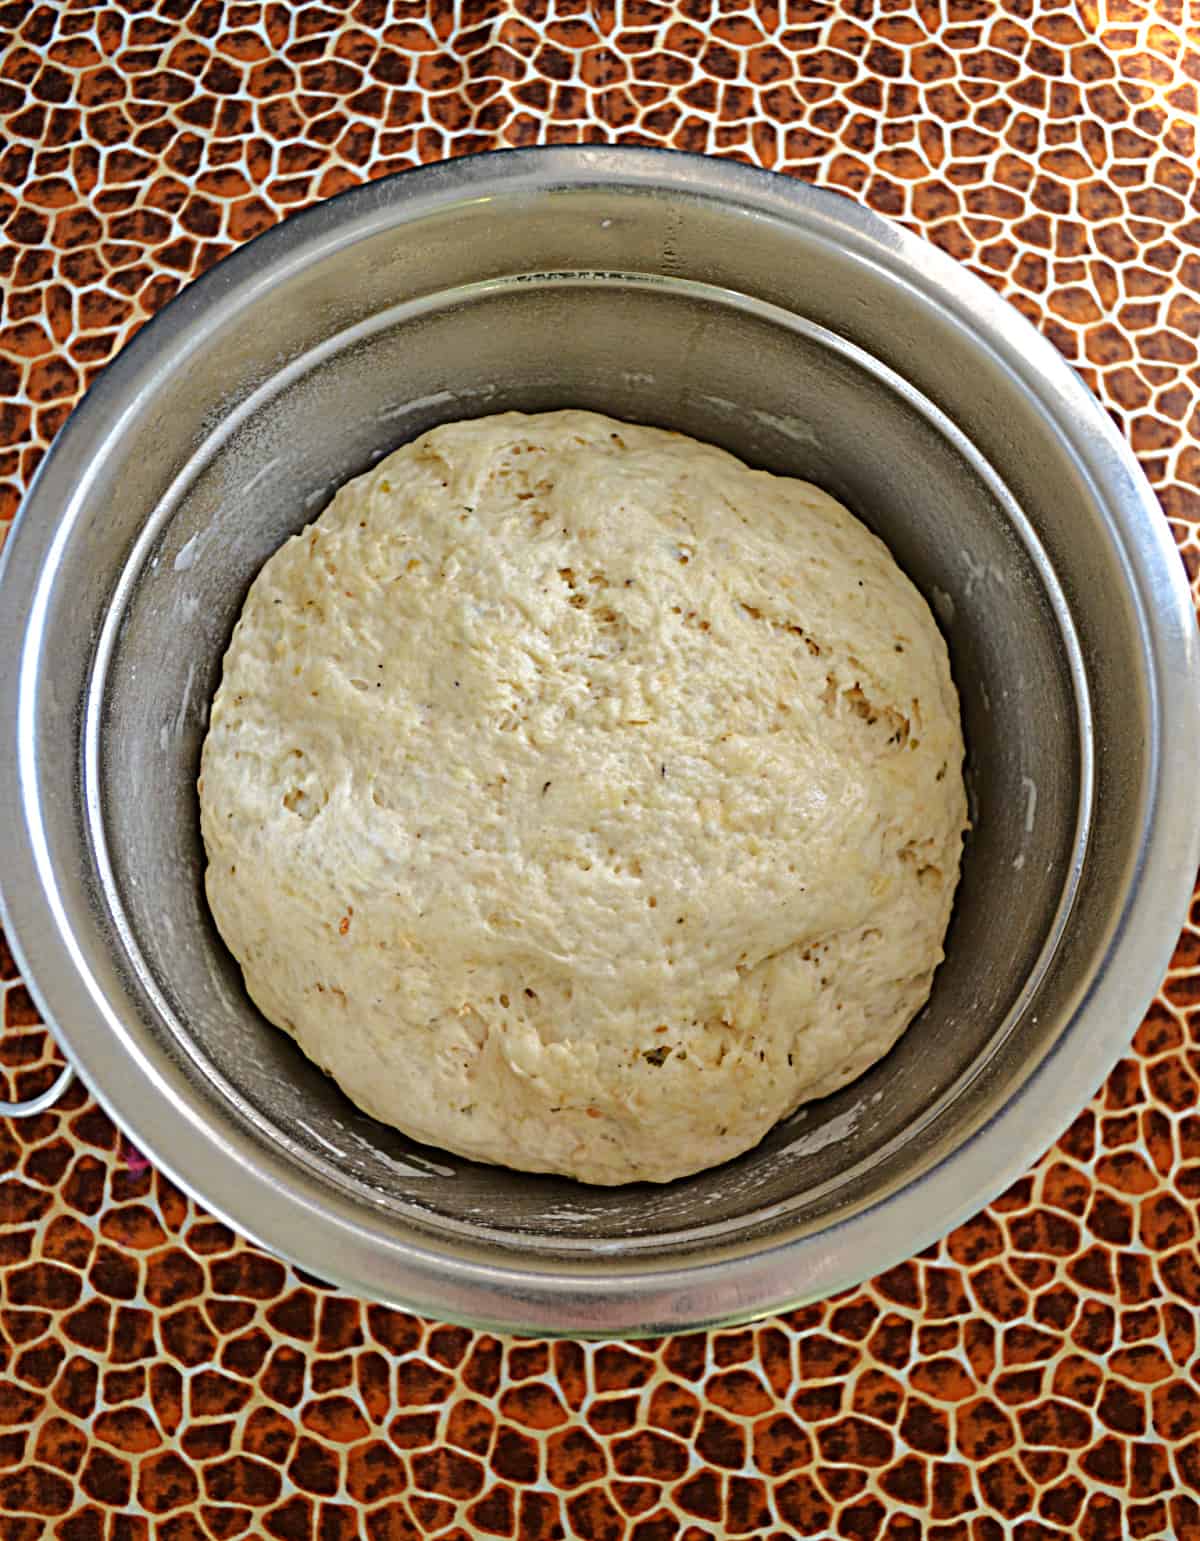 A bowl of bread dough.